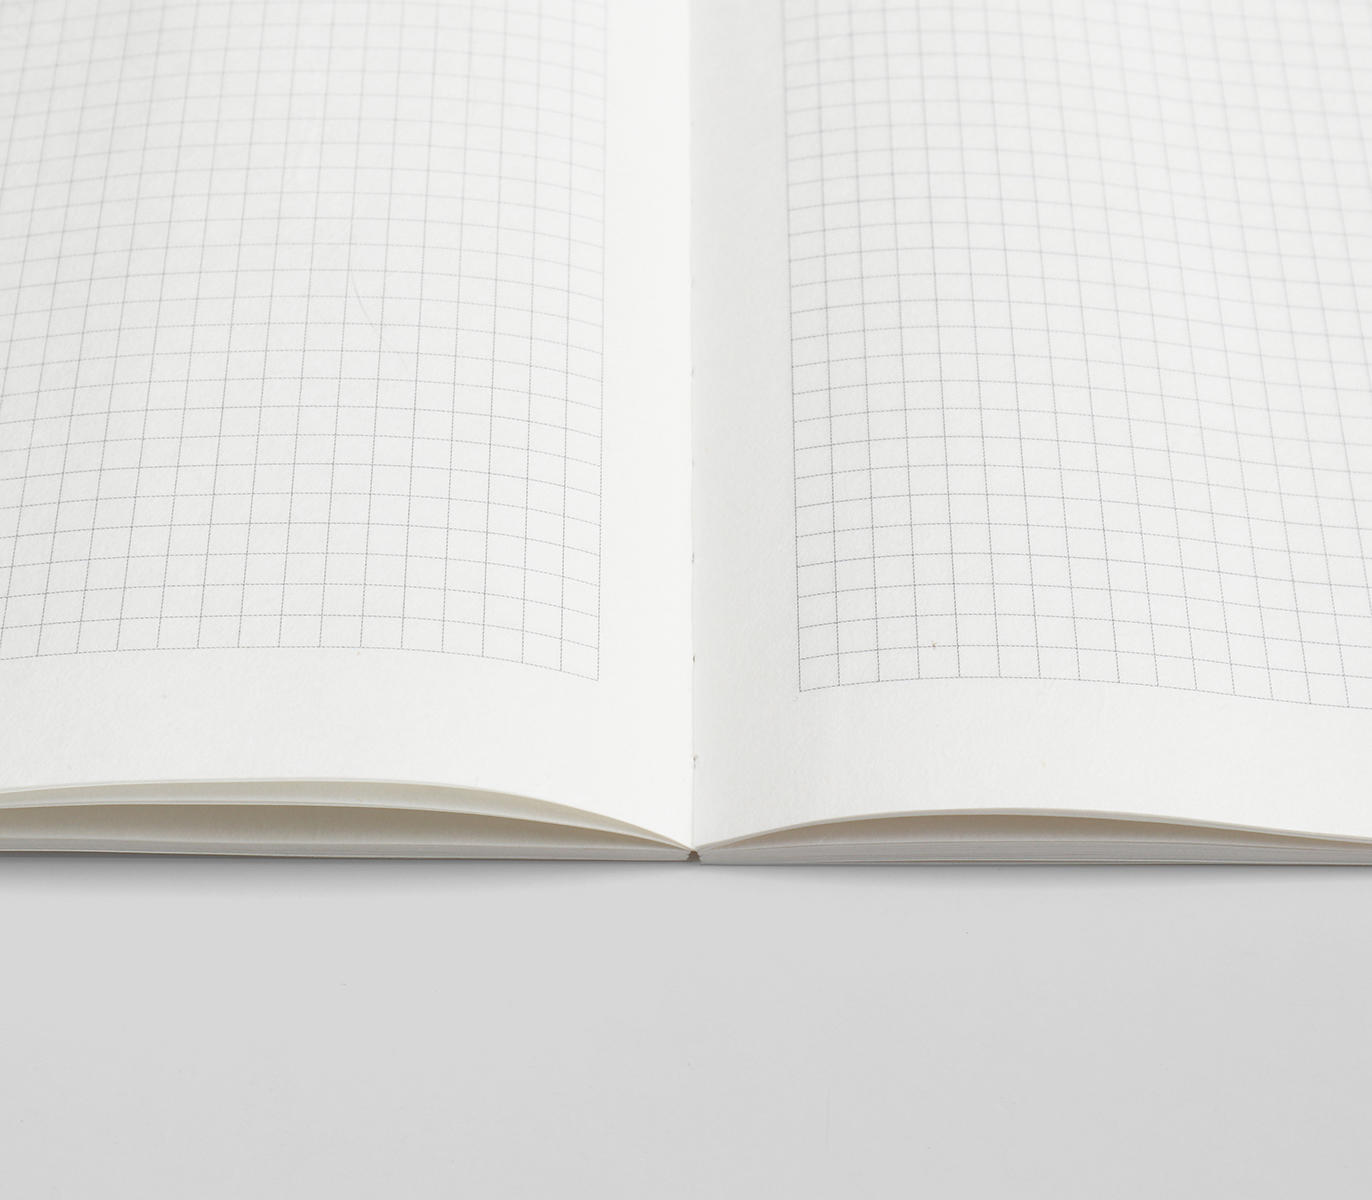 Hanji Cabinet Notebook: A5 Grid Yellow